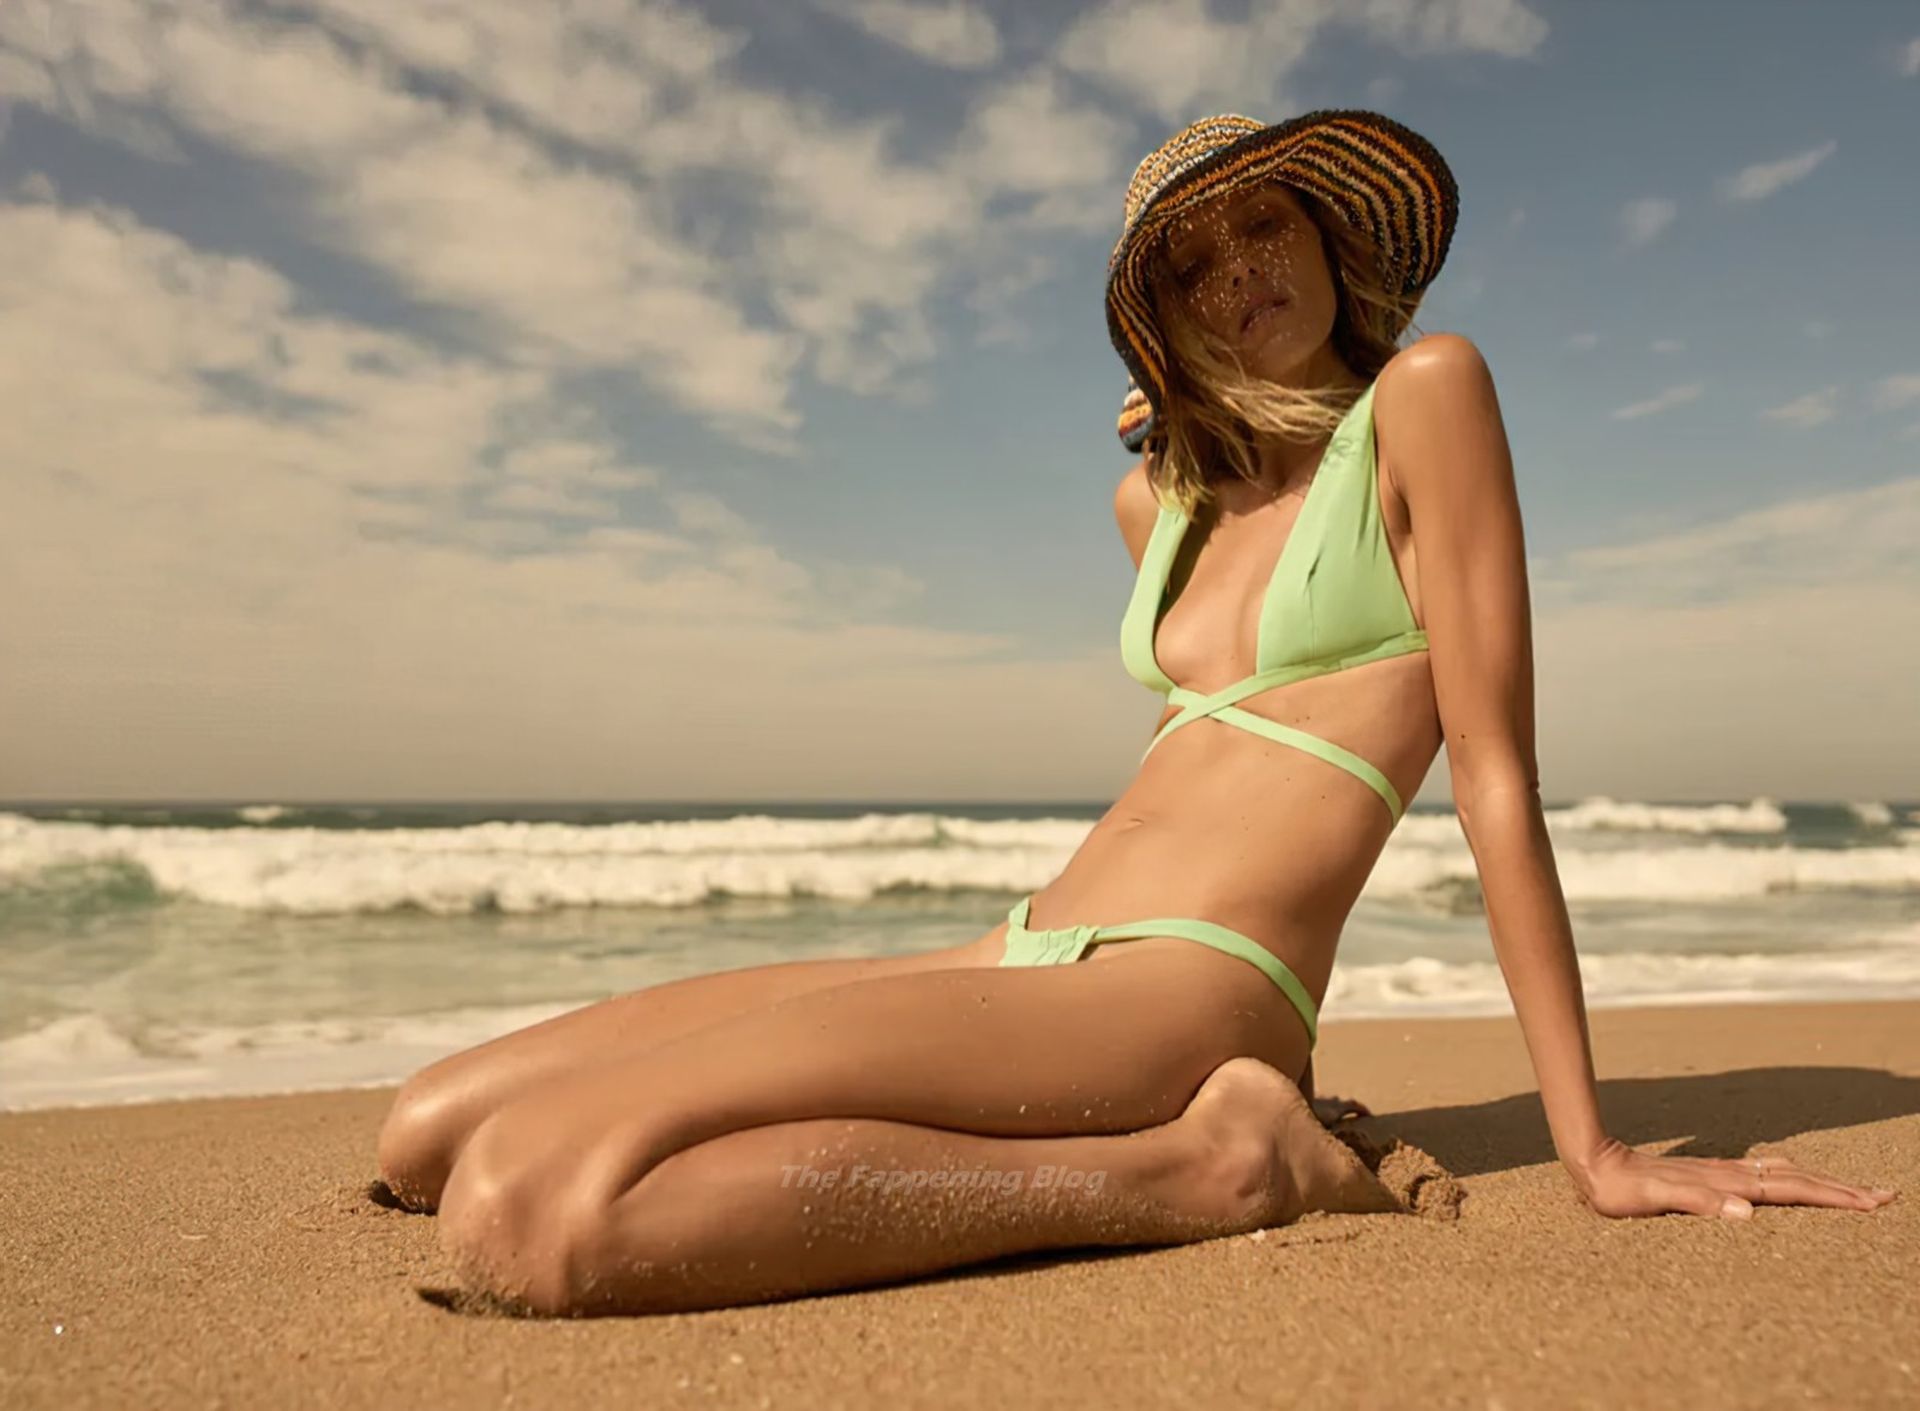 Anja Rubik is Beach Ready in Zara’s Swimsuit Designs (11 Photos)